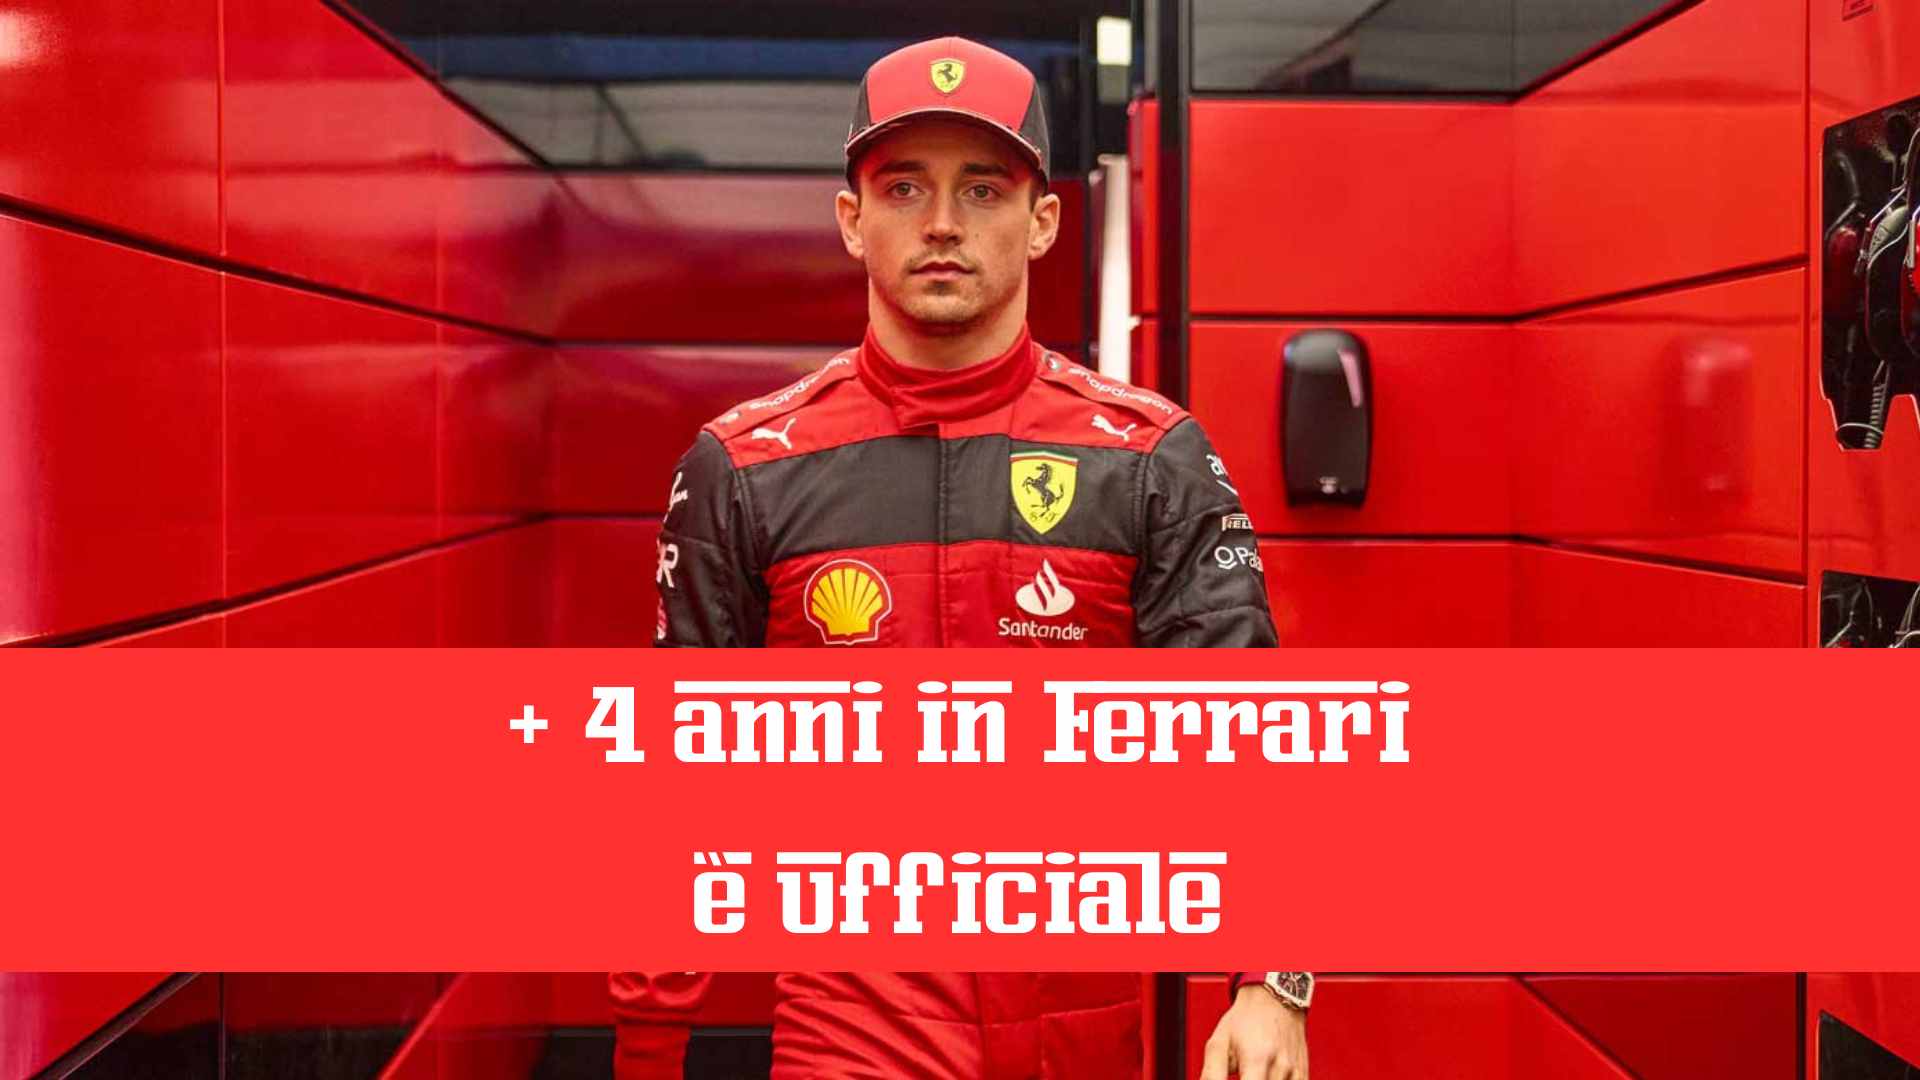 Charles Leclerc rinnova con Ferrari è ufficiale più di 4 anni